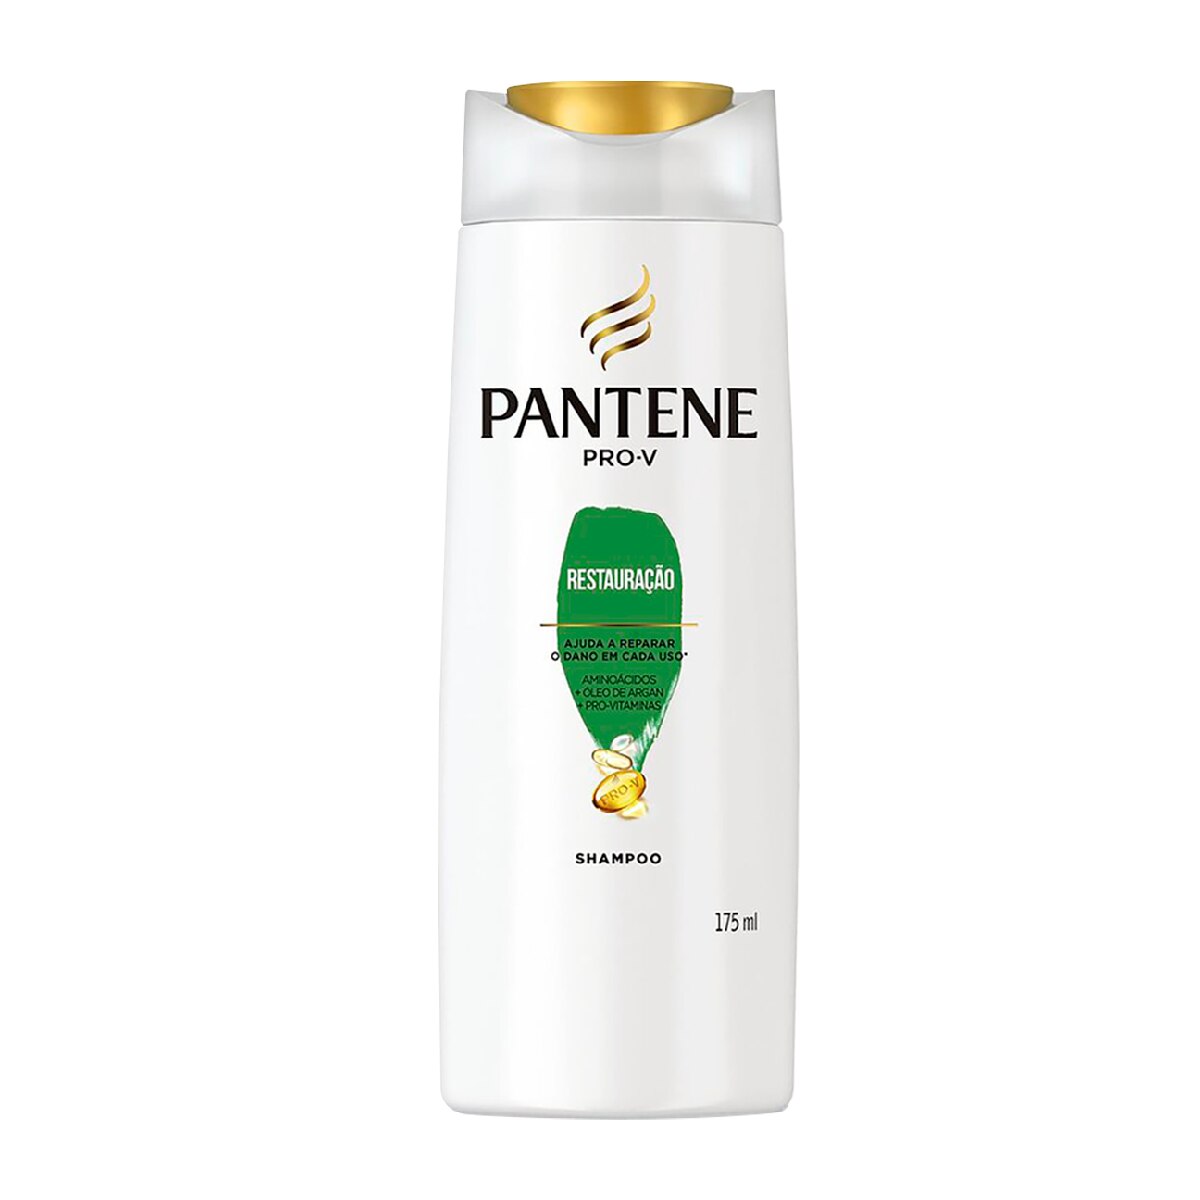 Shampoo Pantene Pro-V Restauracao 175ml